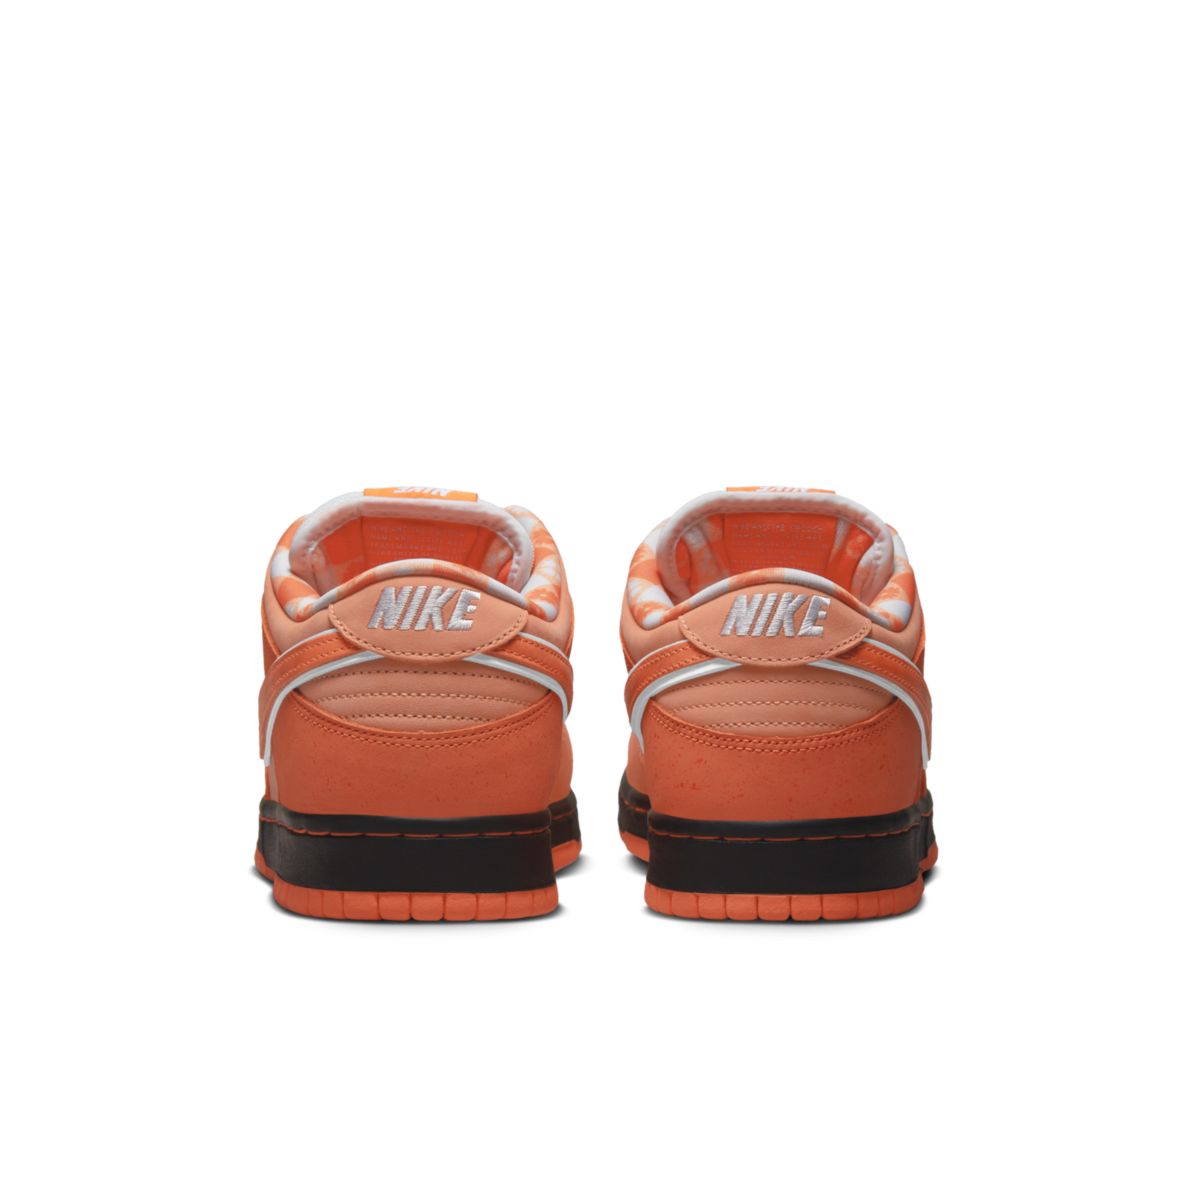 Concepts x Nike SB Dunk Low Orange Lobster FD8776-800 6